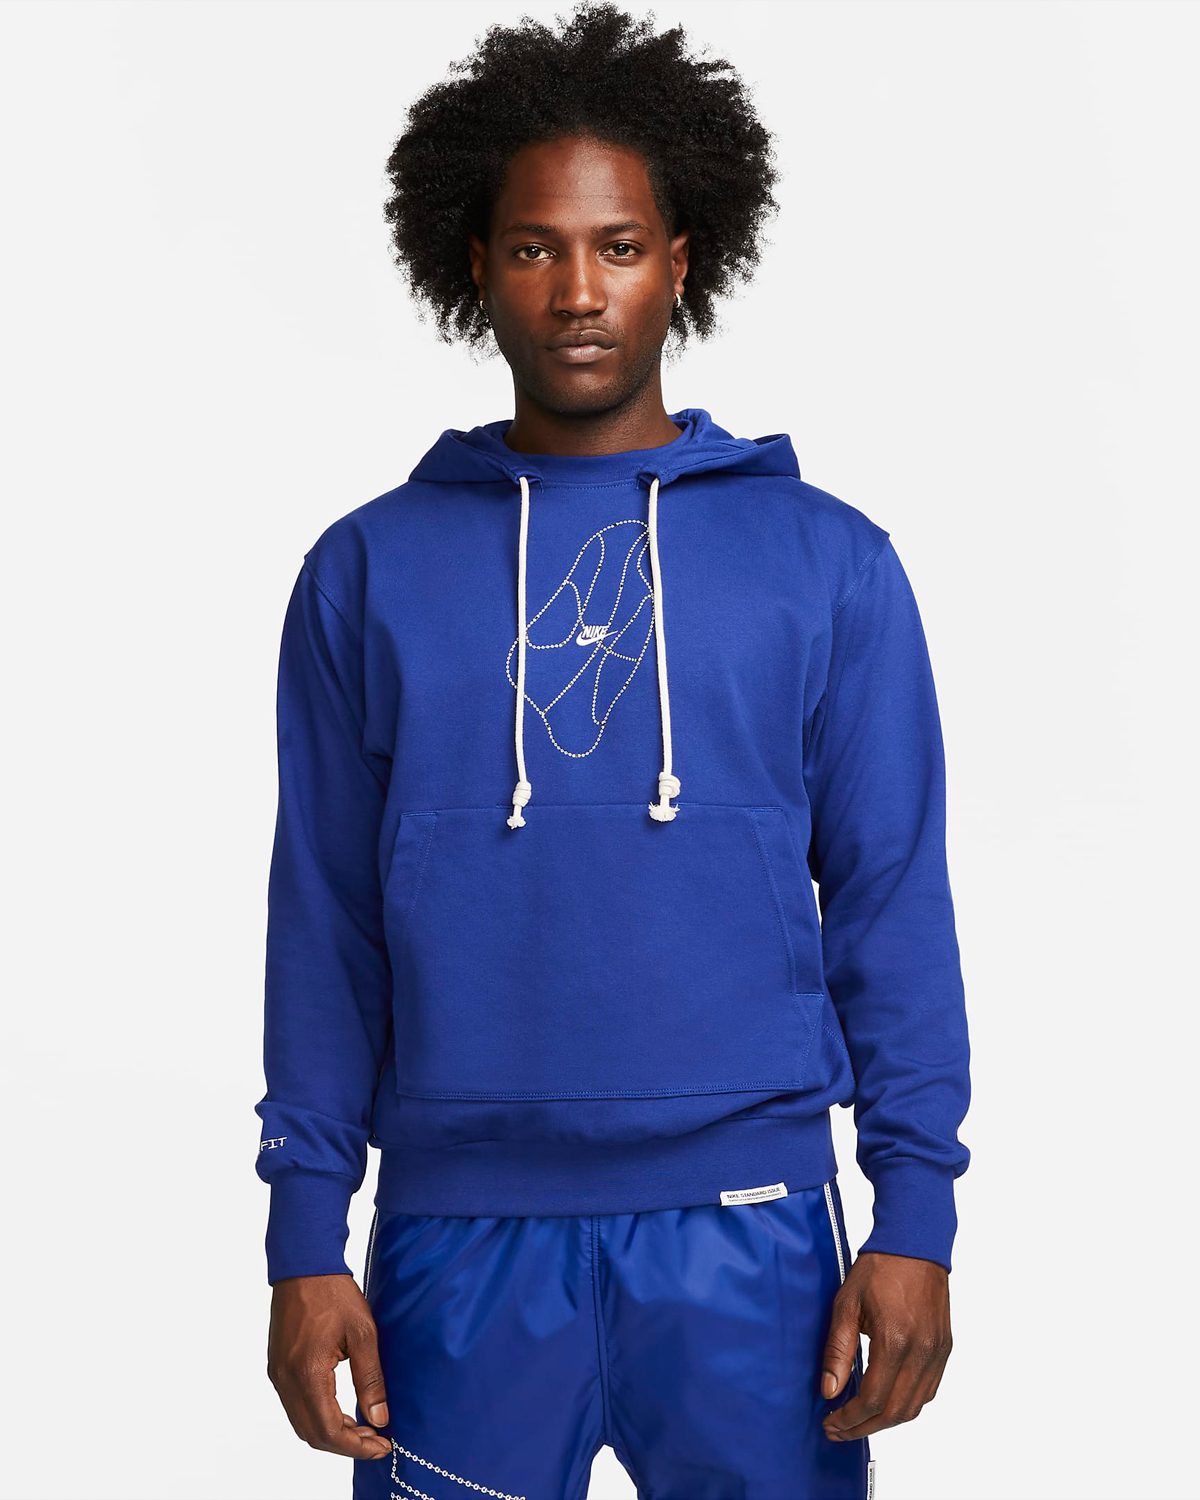 Nike-Standard-Issue-Basketball-Hoodie-Deep-Royal-Blue